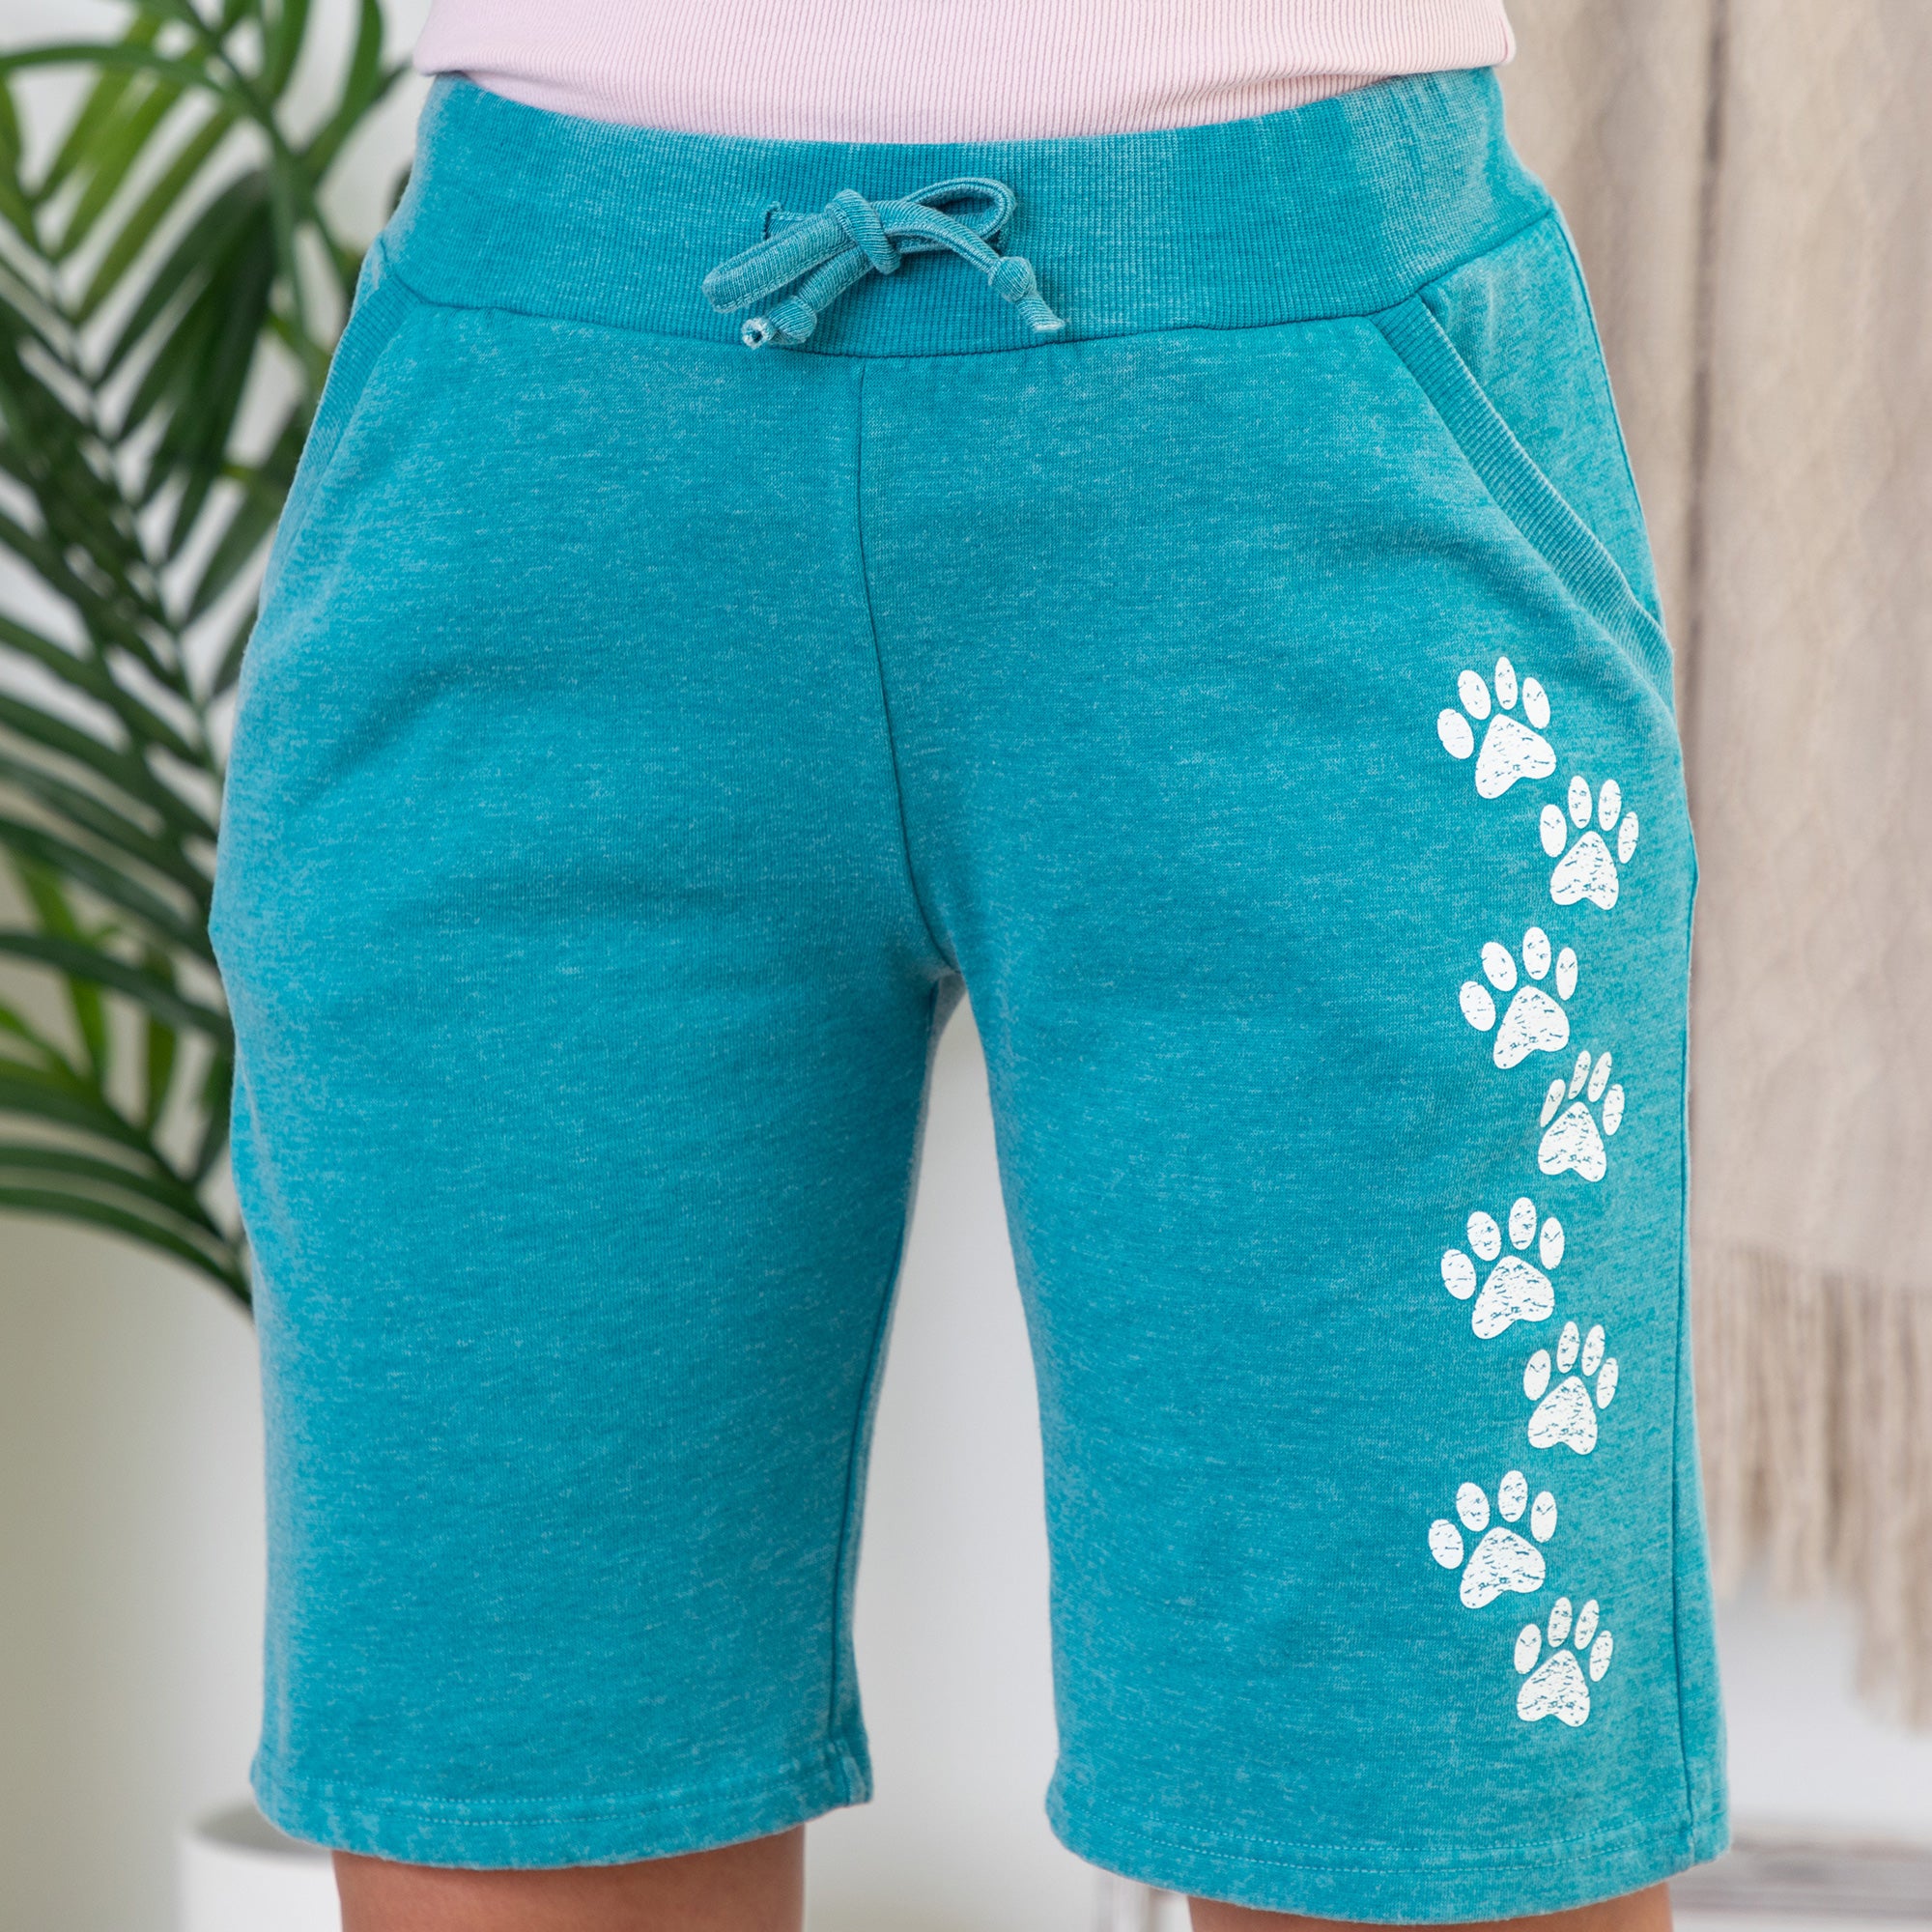 Walking Paws Burnout Board Shorts - Turquoise - L